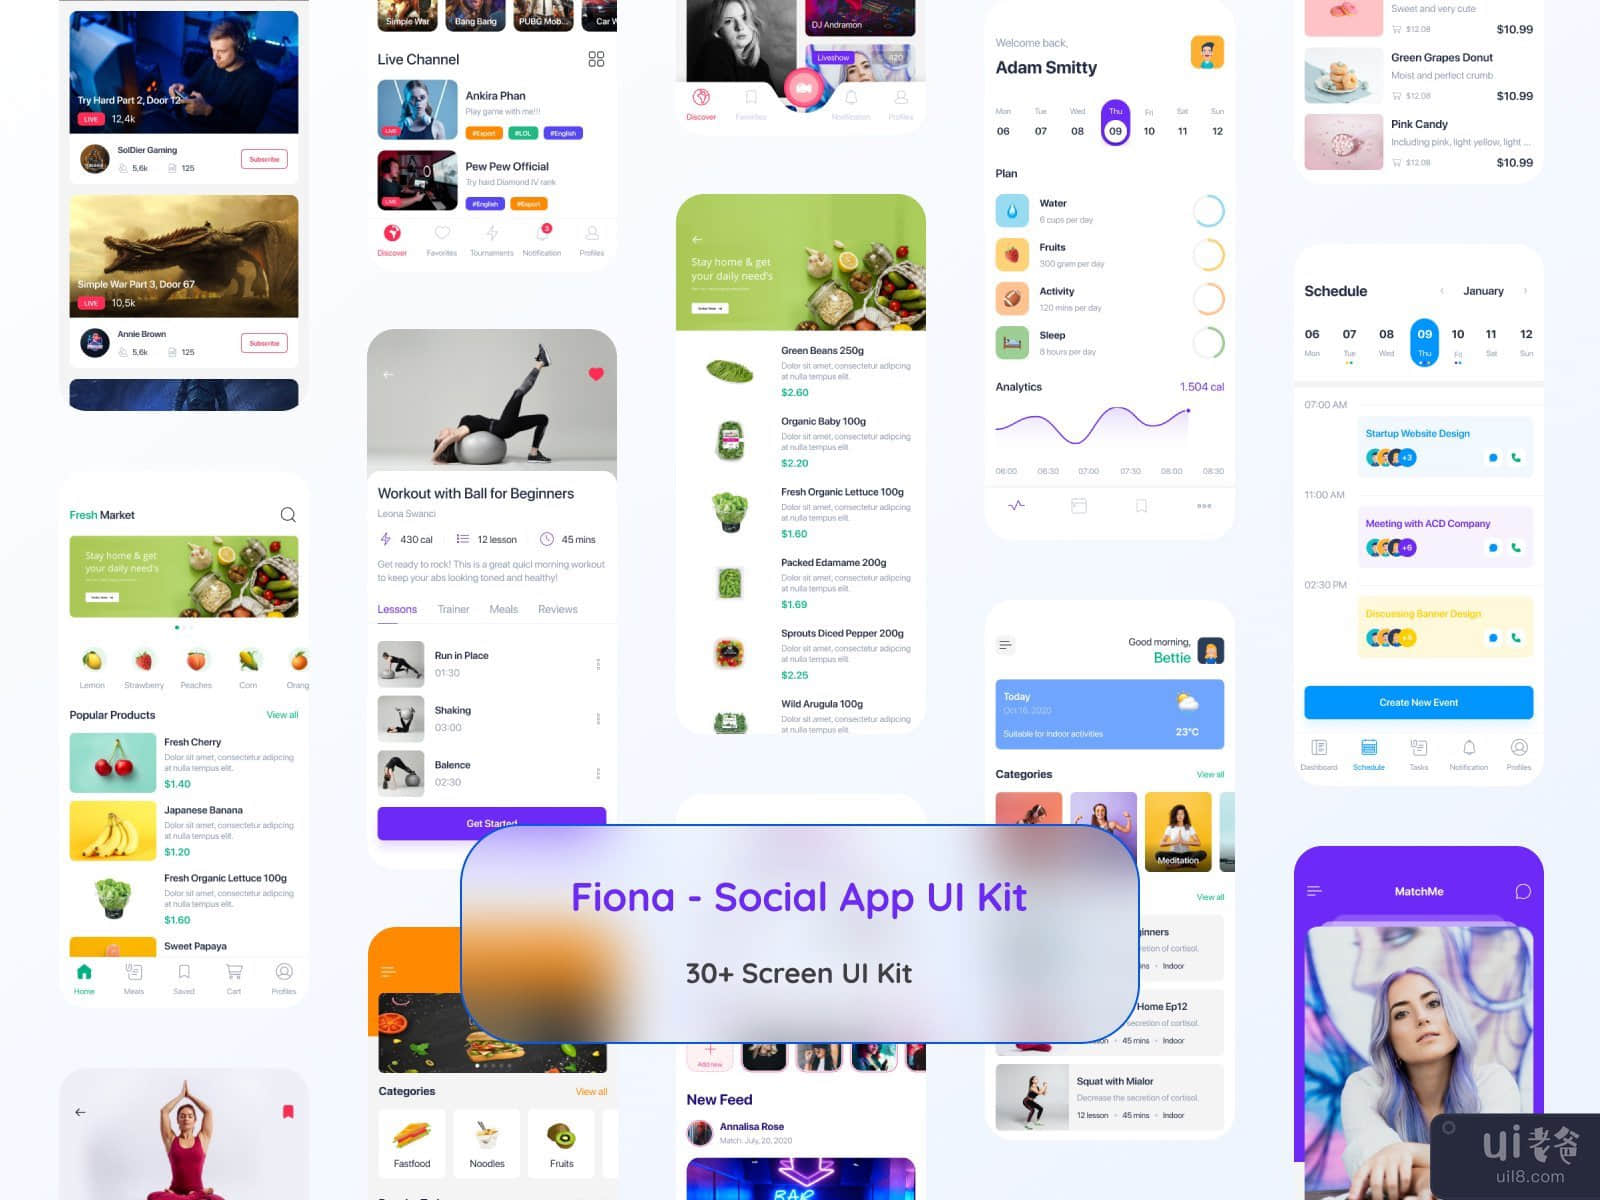 Fiona - Social App UI Kit